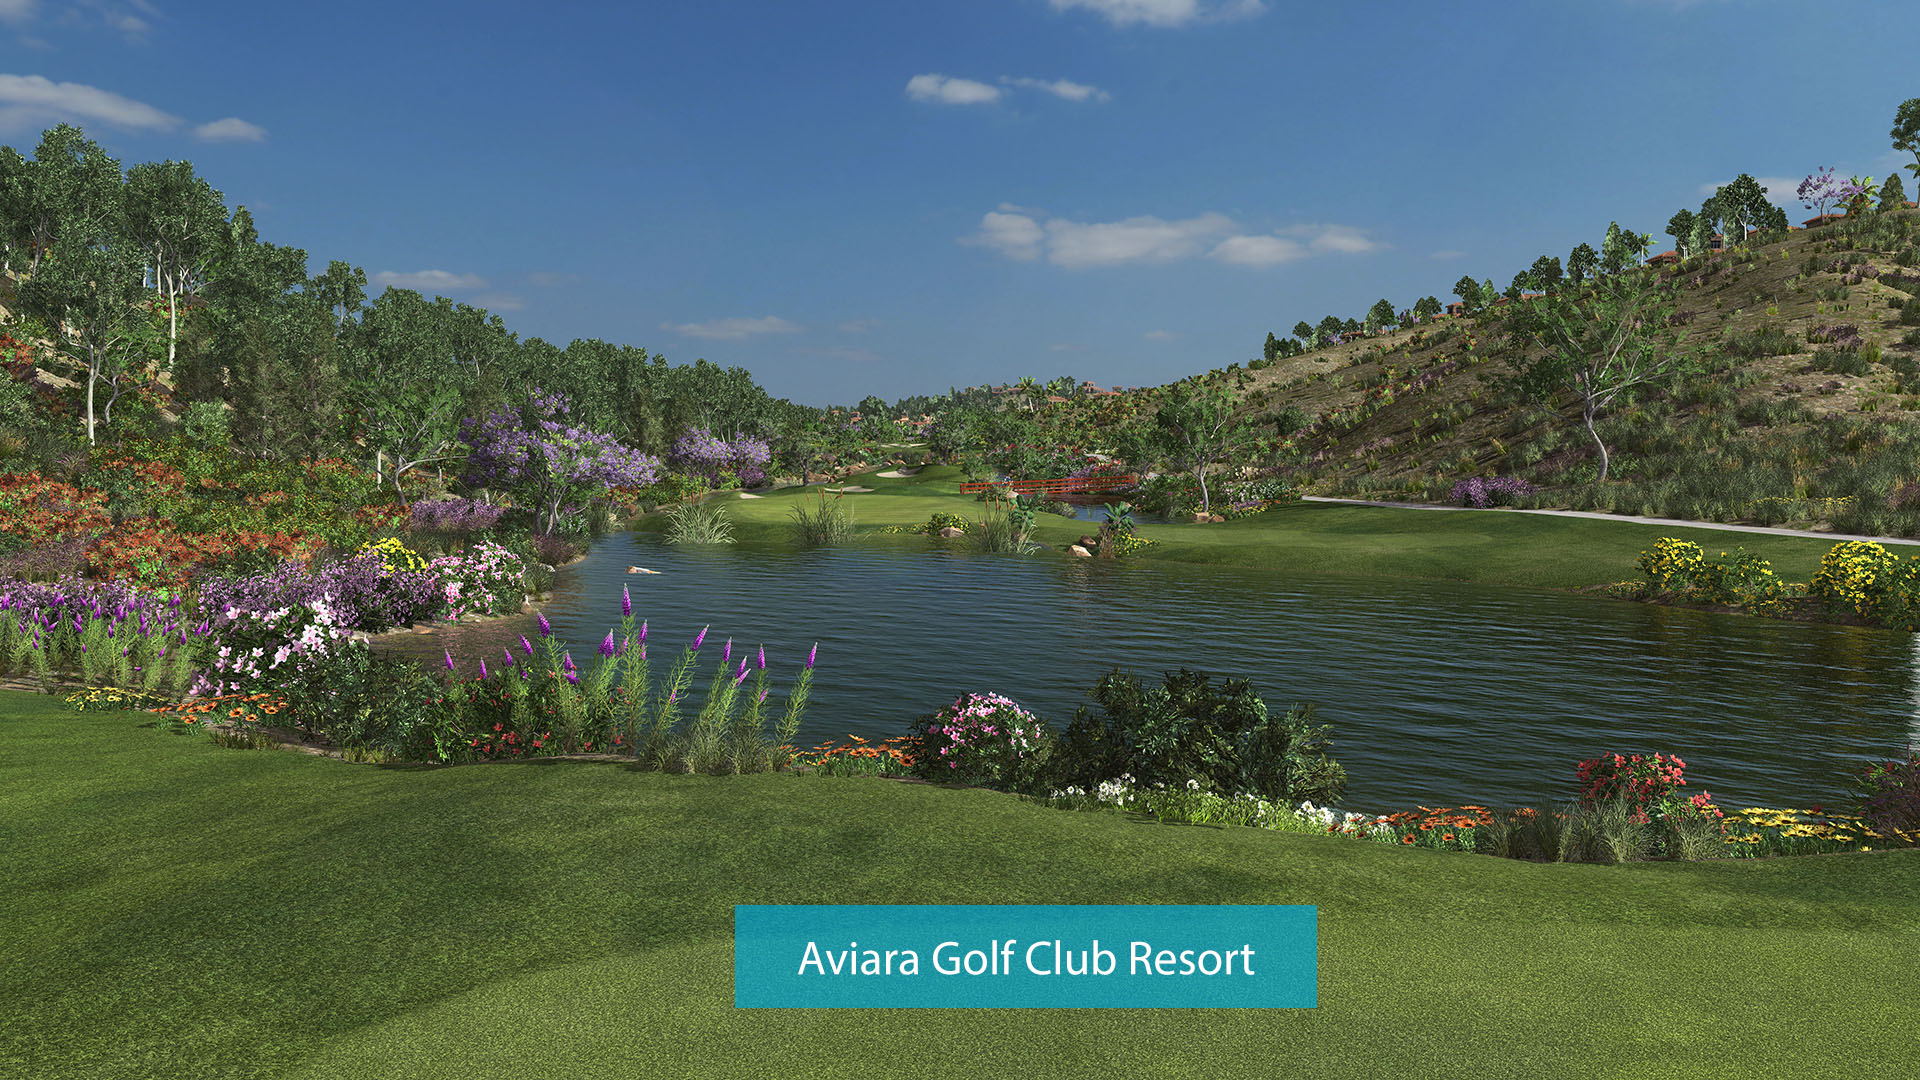 Aviara Golf Club Resort copy